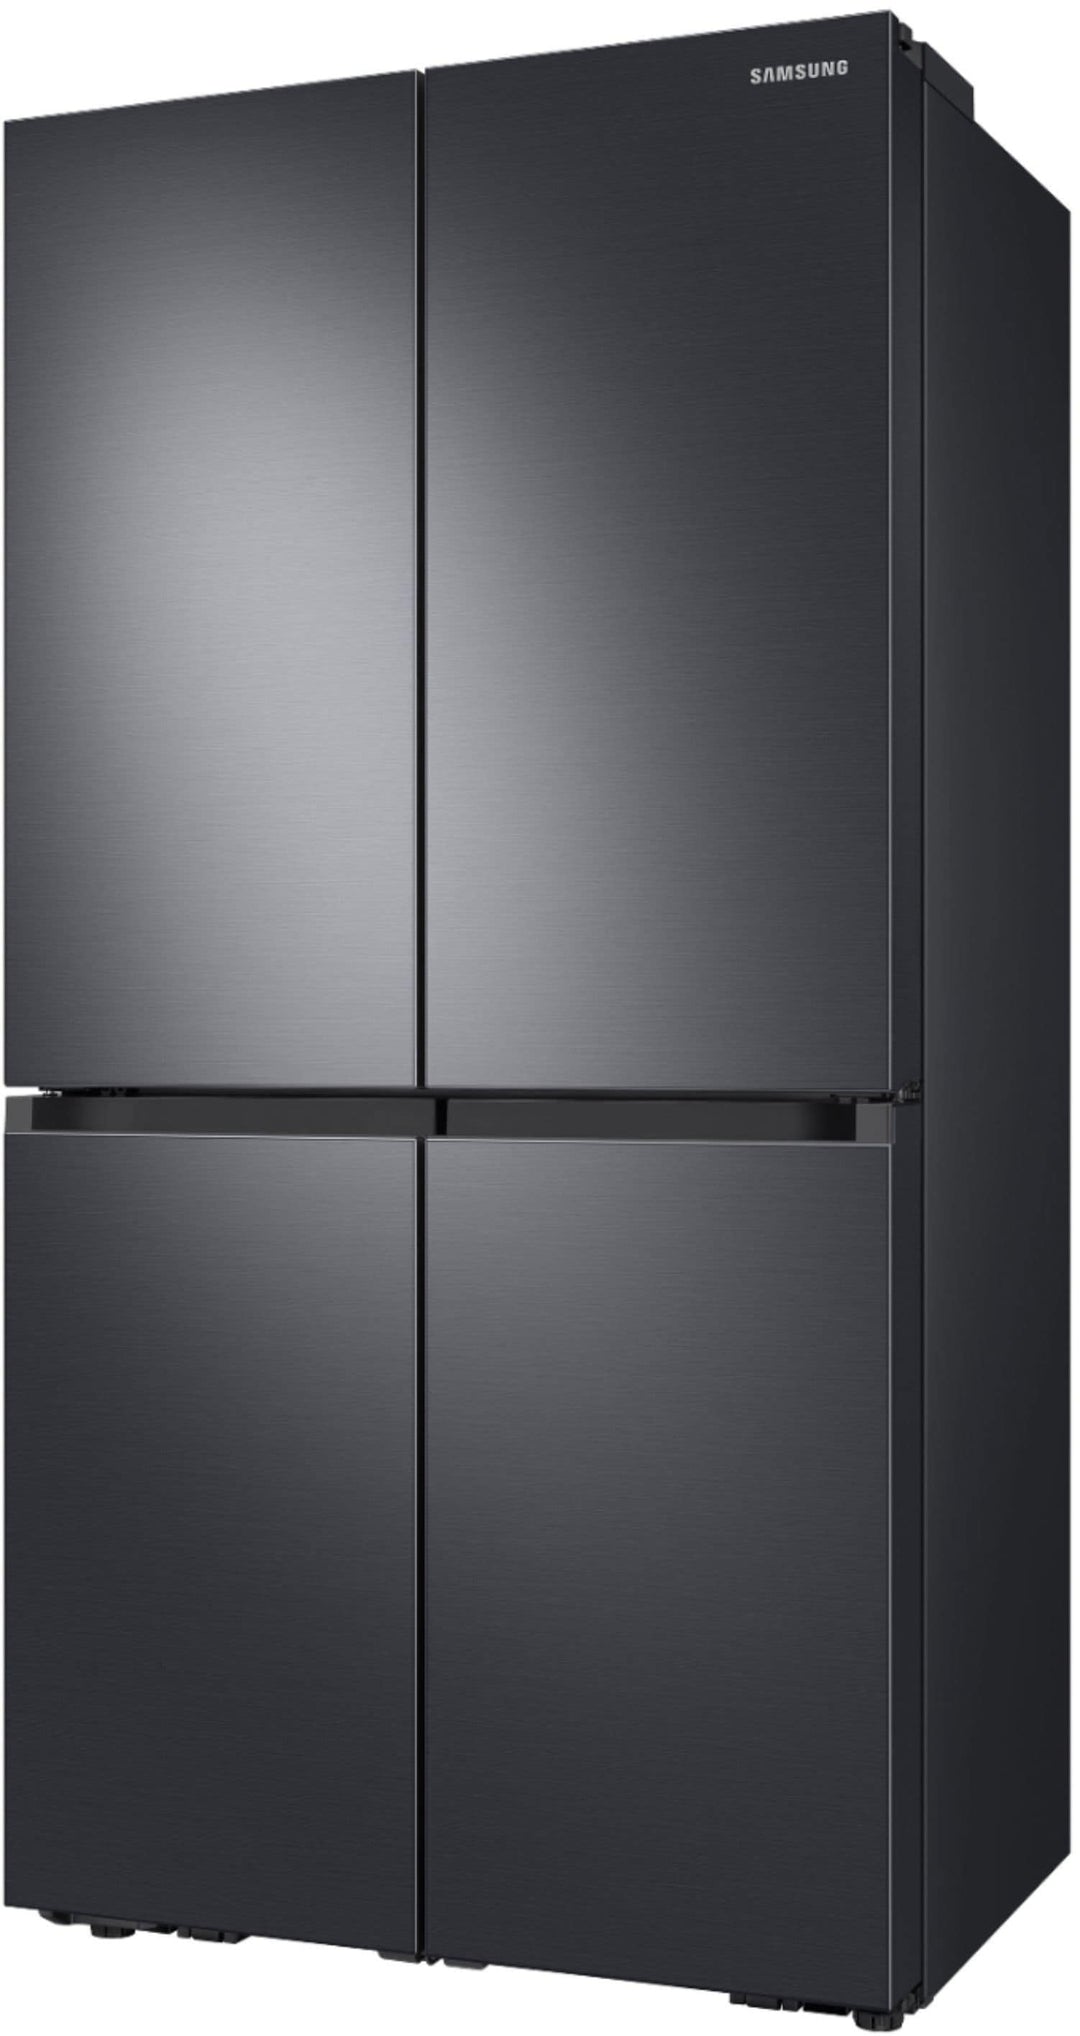 Samsung - 23 cu. ft. 4-Door Flex French Door Counter-Depth Refrigerator with WiFi, AutoFill Water Pitcher & Dual Ice Maker - Black stainless steel_1